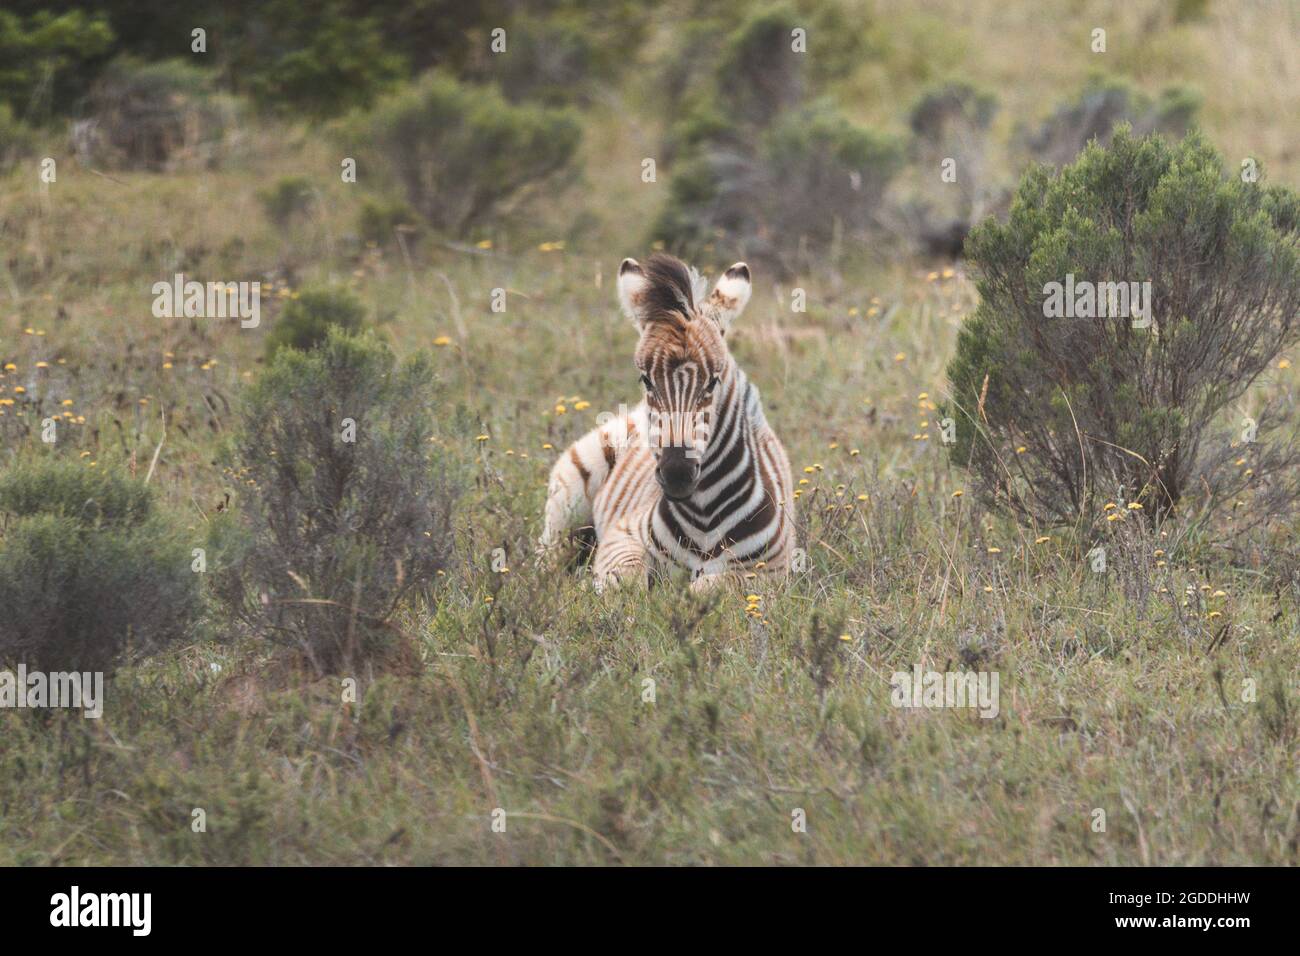 Zebra sitting in a field in South Africa. Stock Photo